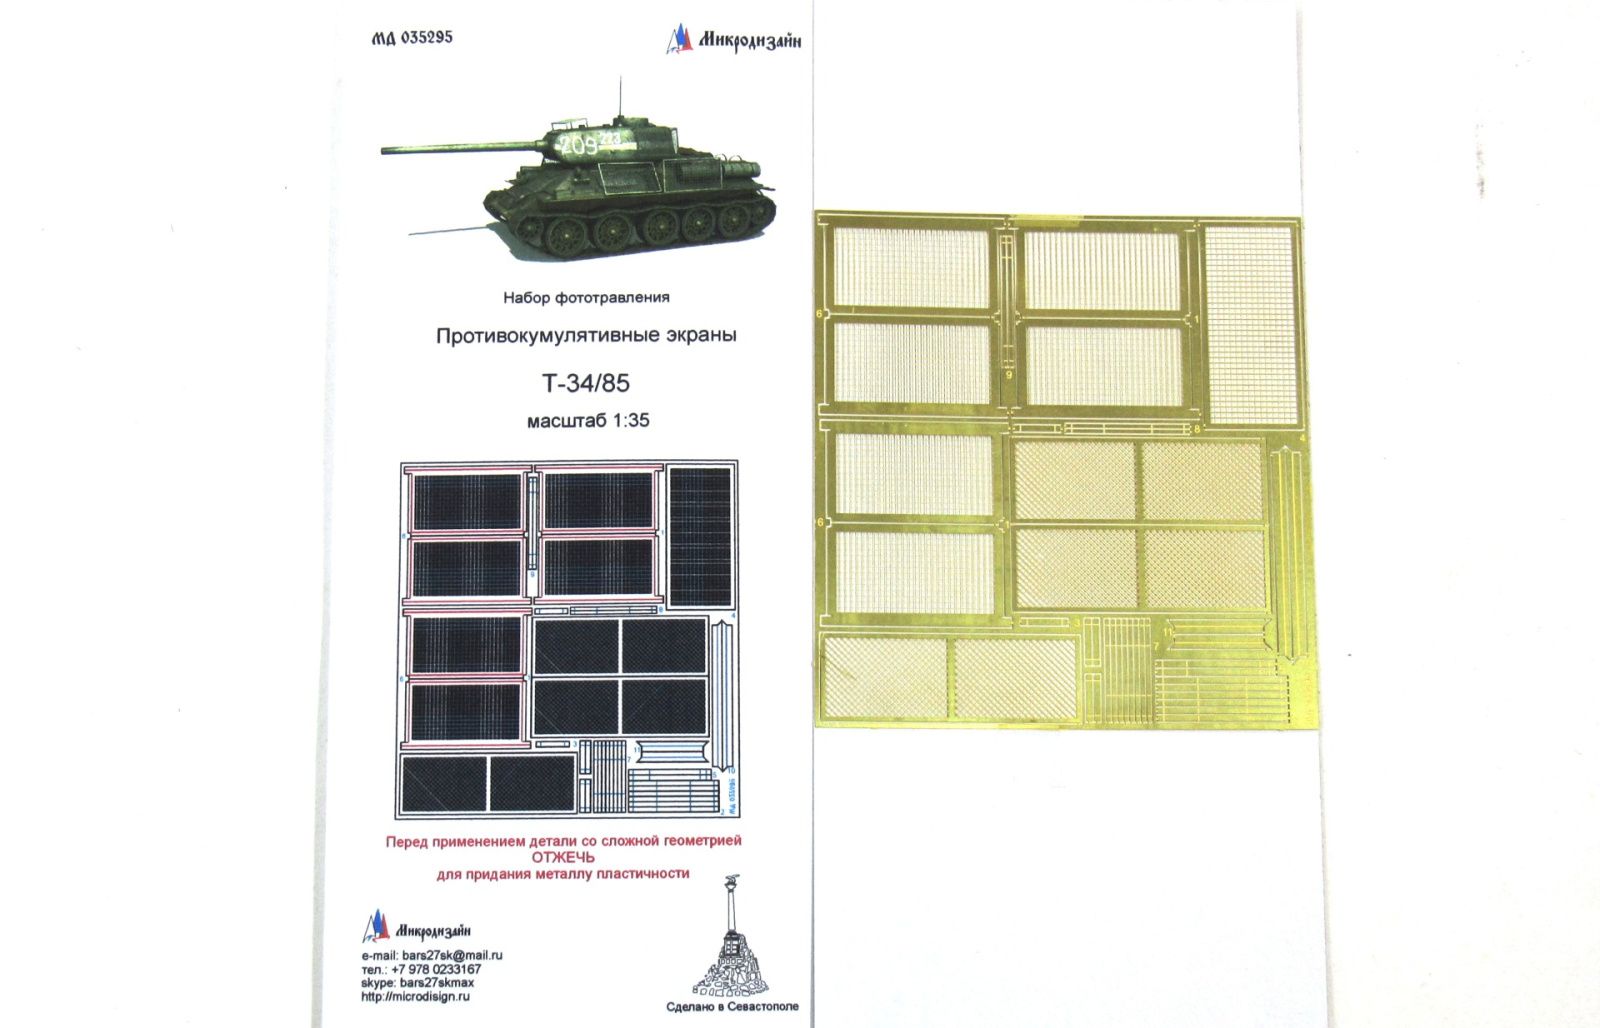 Anticumulatory screens T-34/85 (Berlin operation) - imodeller.store